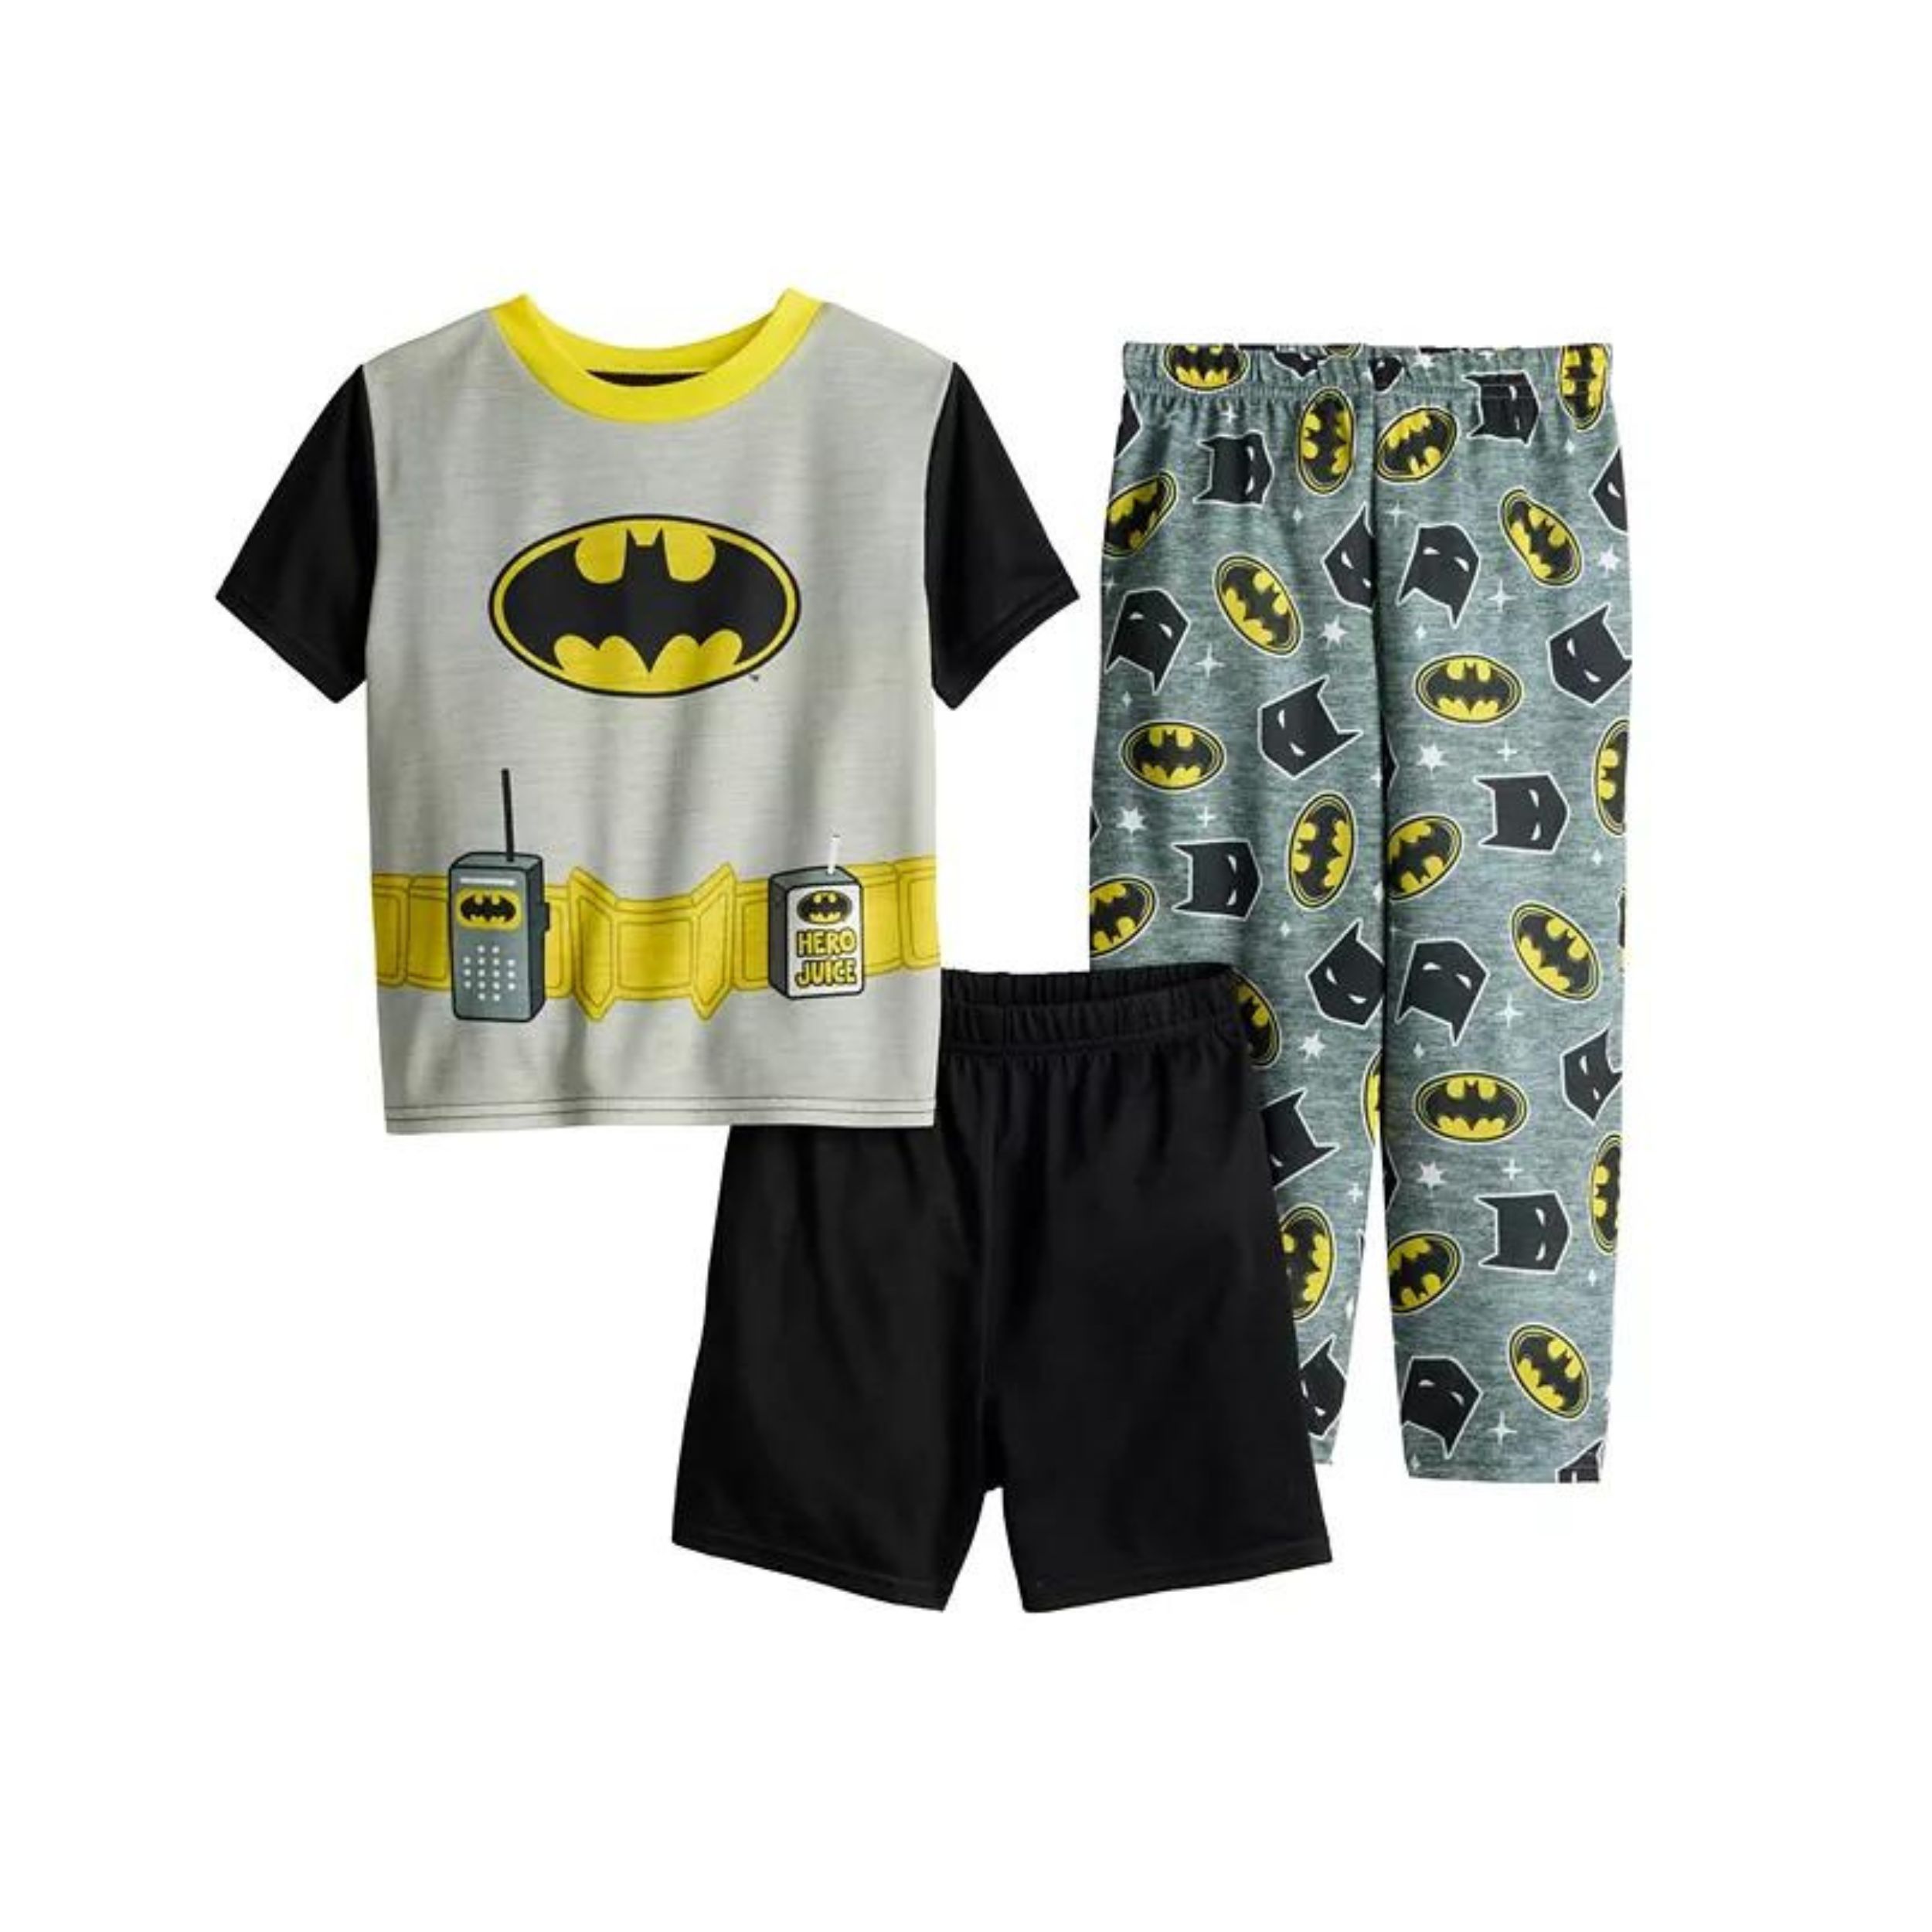 Batman Toddler Boys Pajama 3 Piece Set Size 4T - image 1 of 4